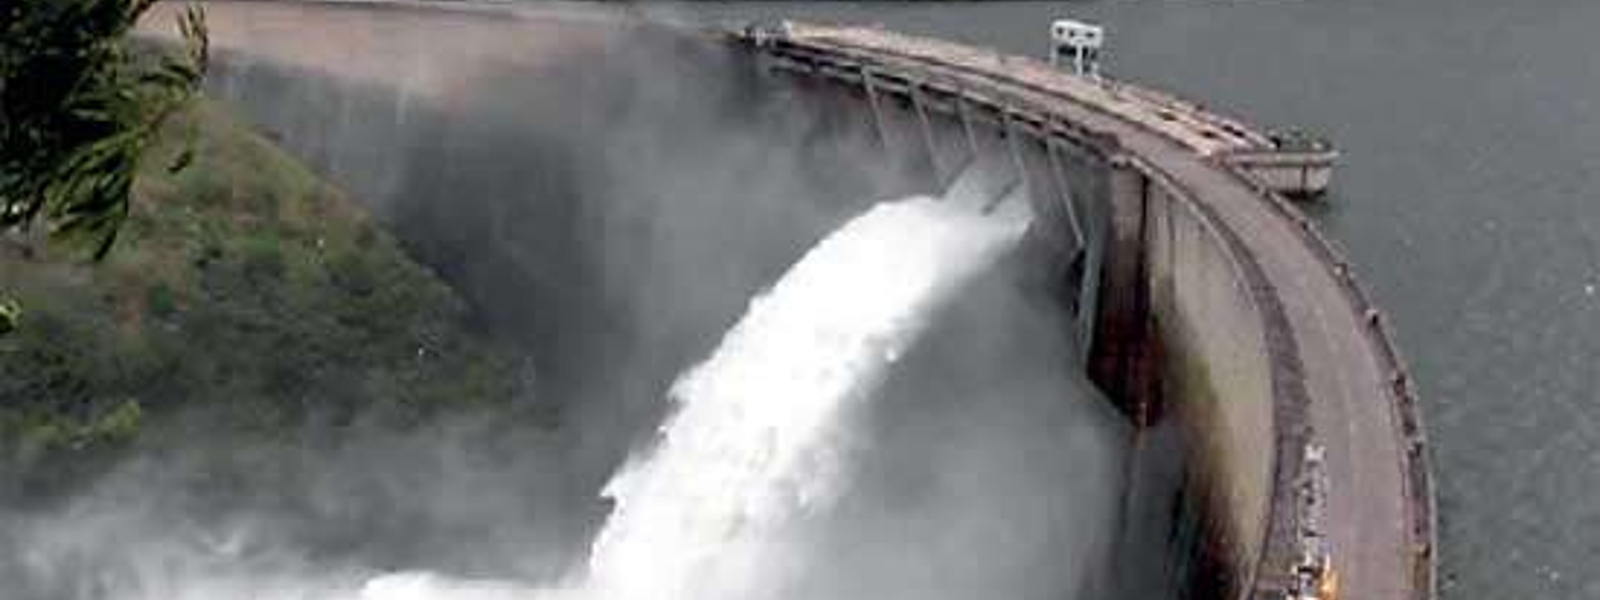 50% Hydropower generation thanks to heavy rains